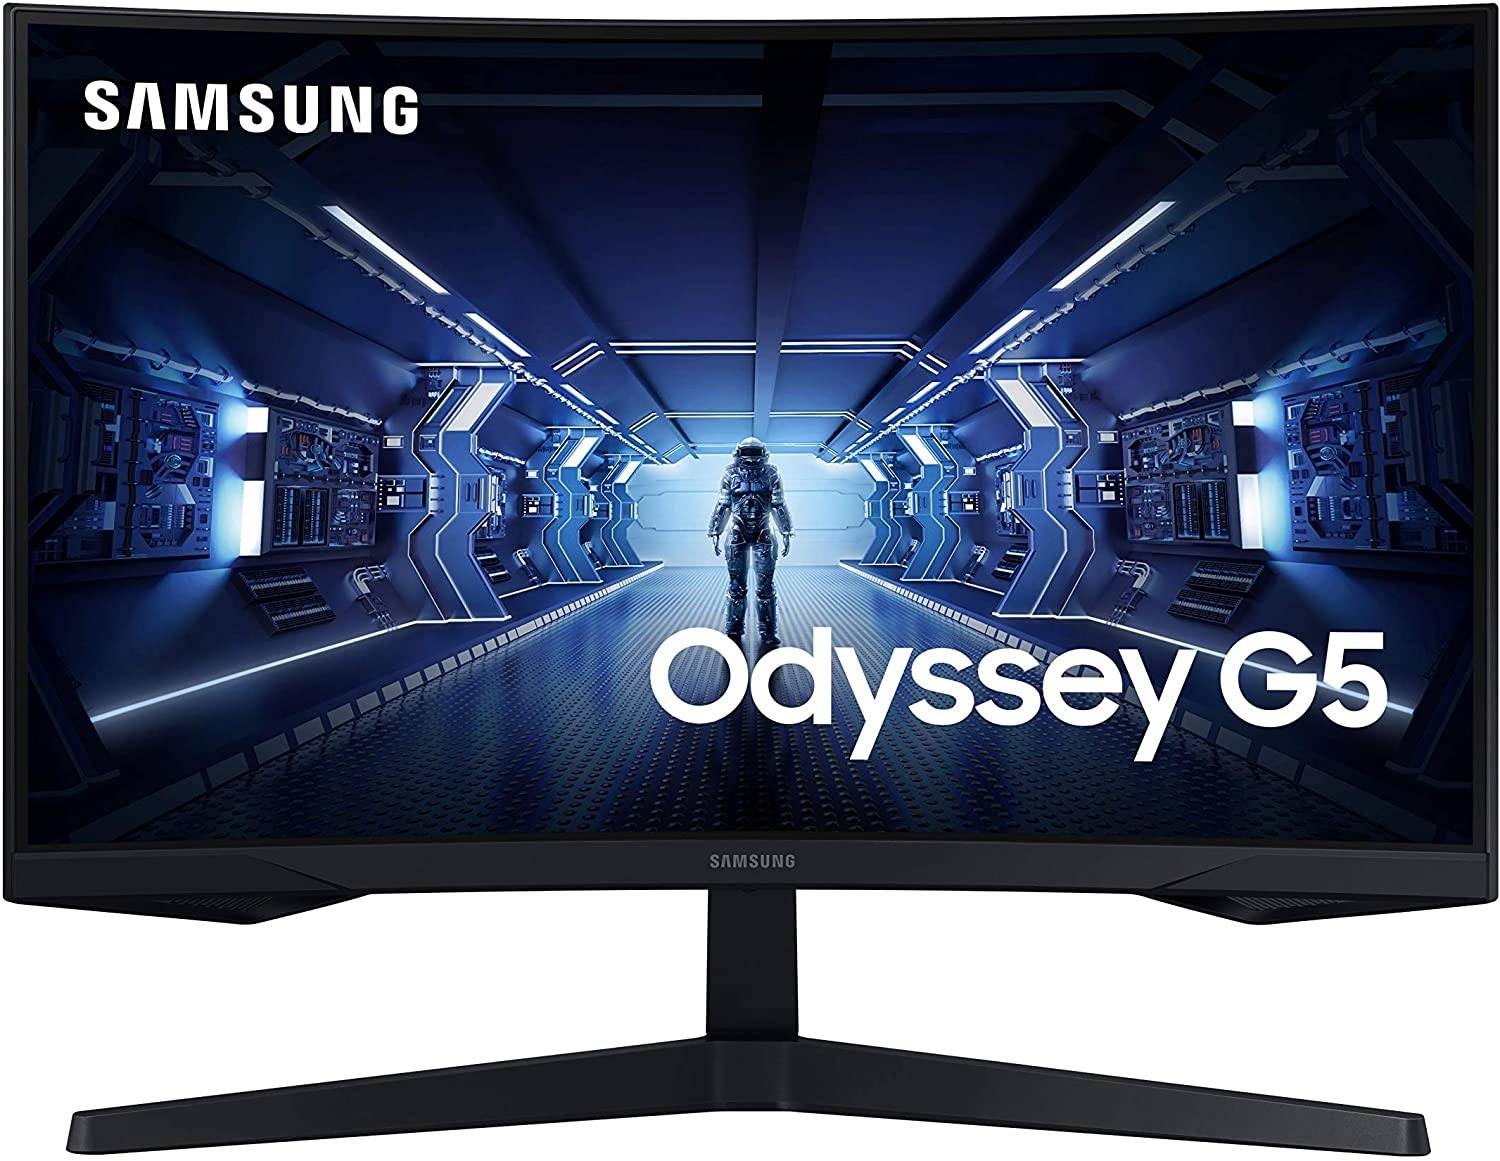 Serie Samsung Odyssey G5 PBI